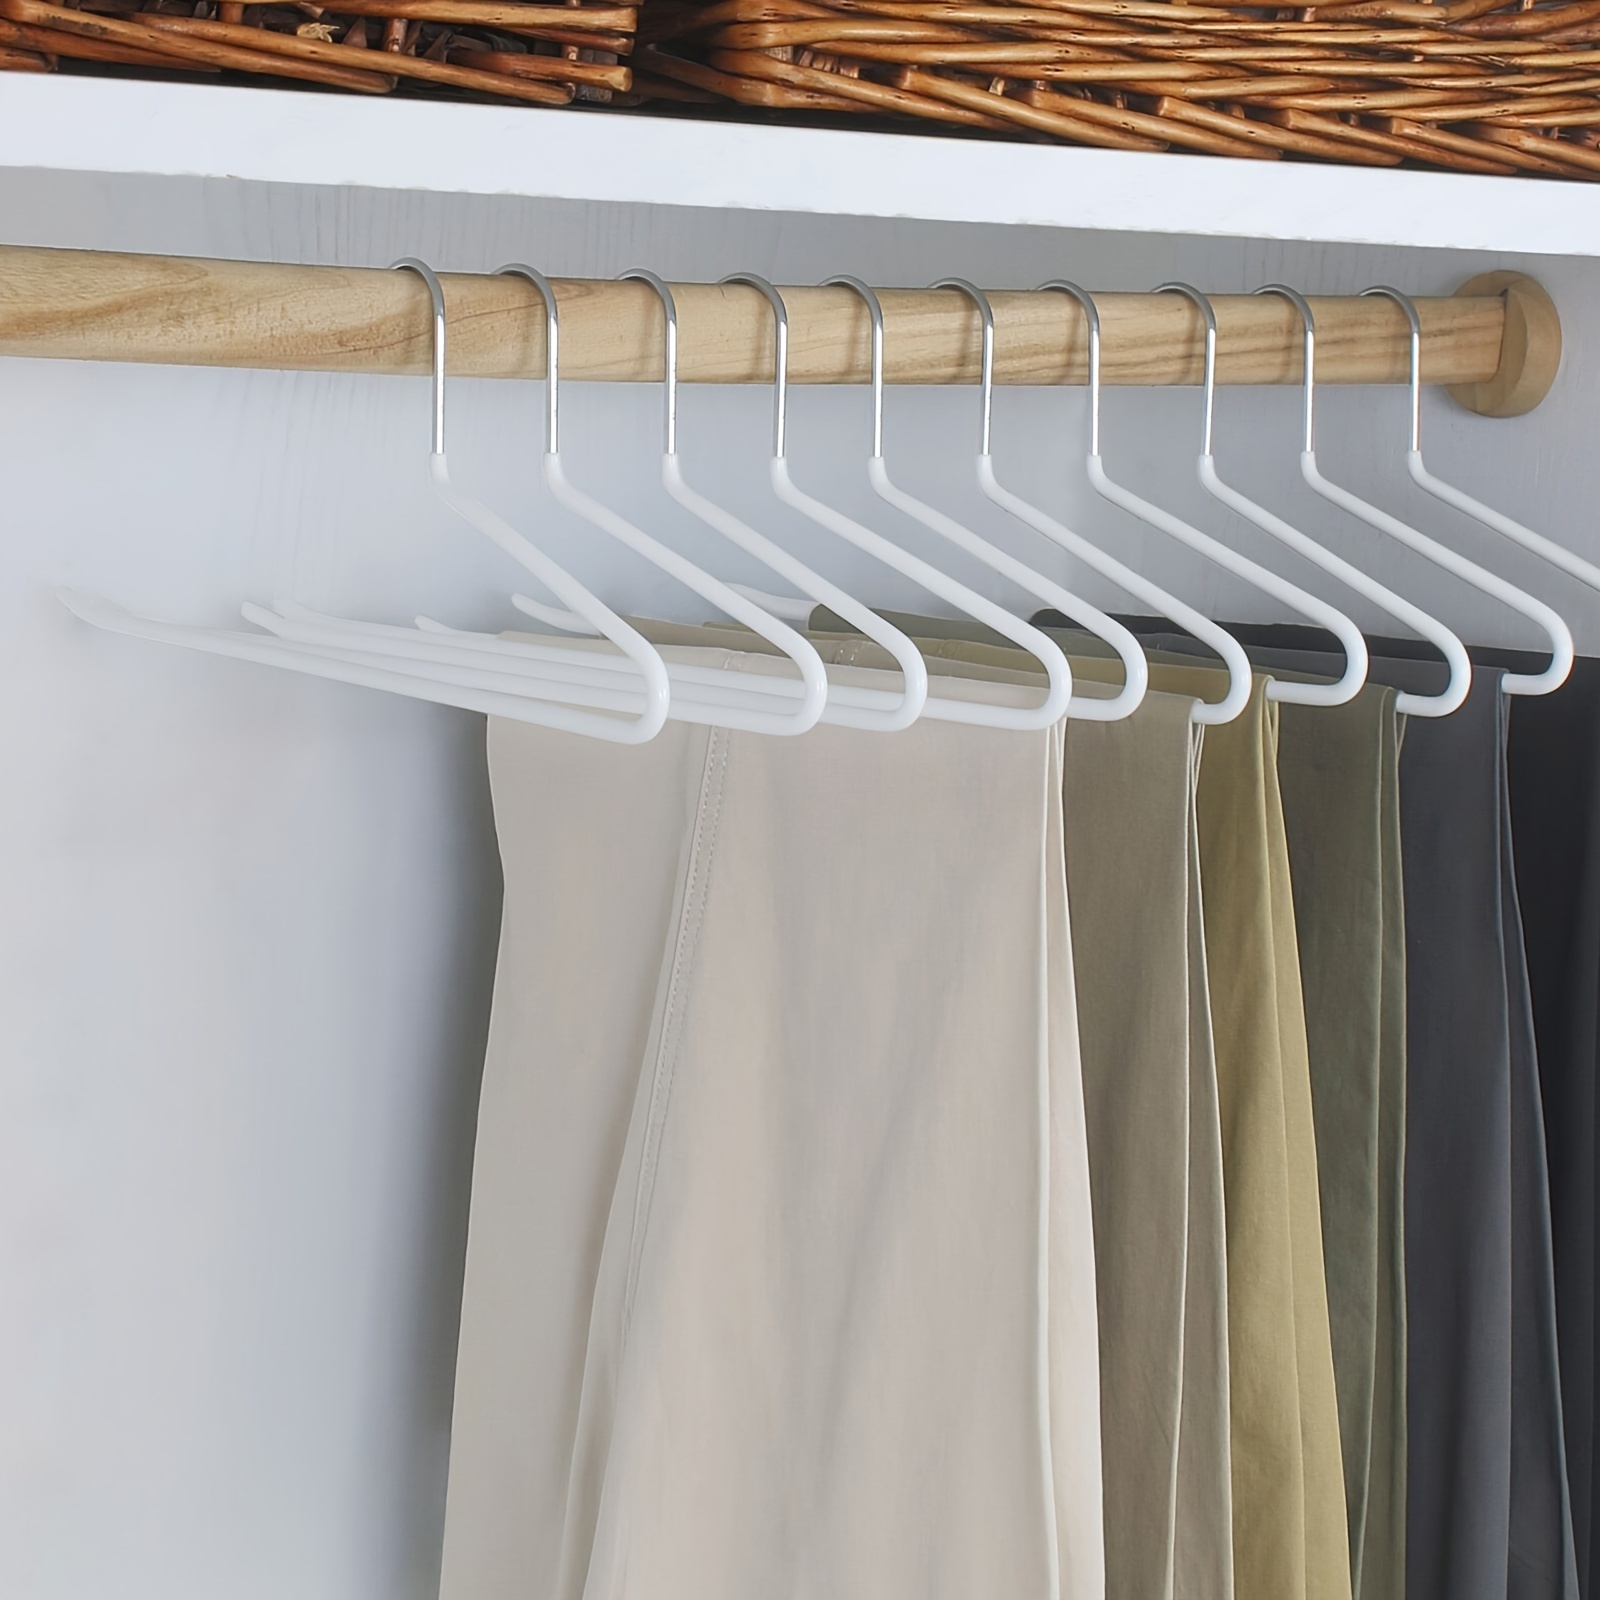 

10pcs/set Pants Hangers, Heavy Duty Clothes Racks For Ties, Camisoles, Household Storage Organizer For Bathroom, Bedroom, Closet, Wardrobe, Home, Dorm